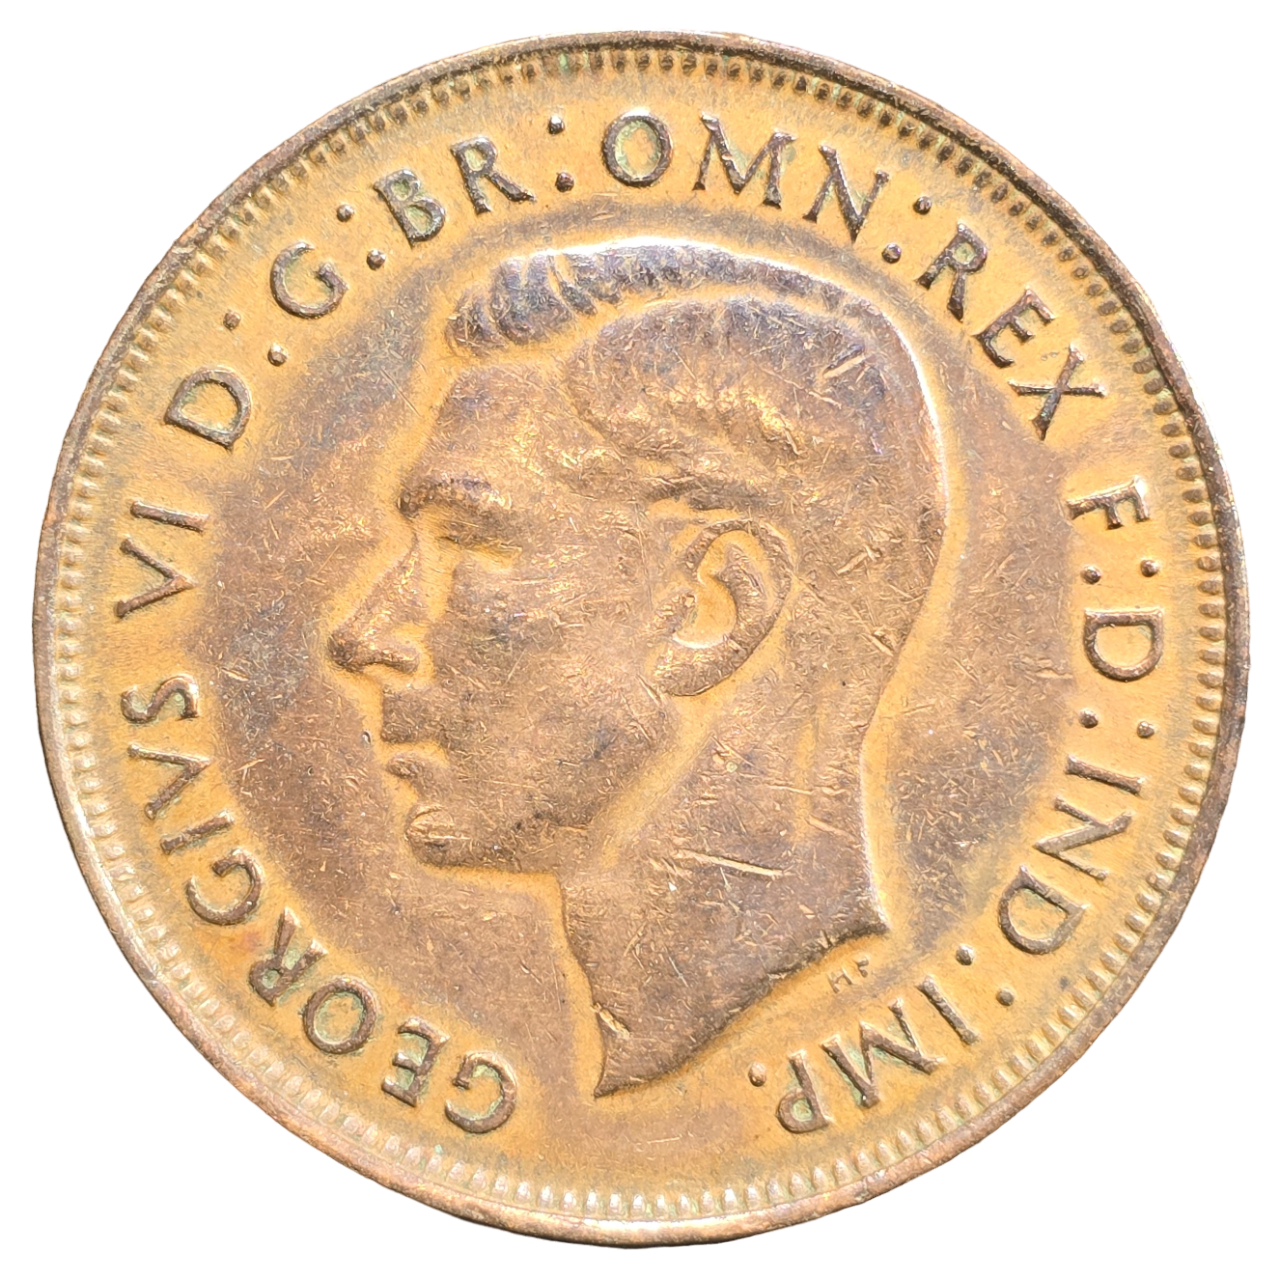 1946 Australian Penny - Very Good *Cleaned*